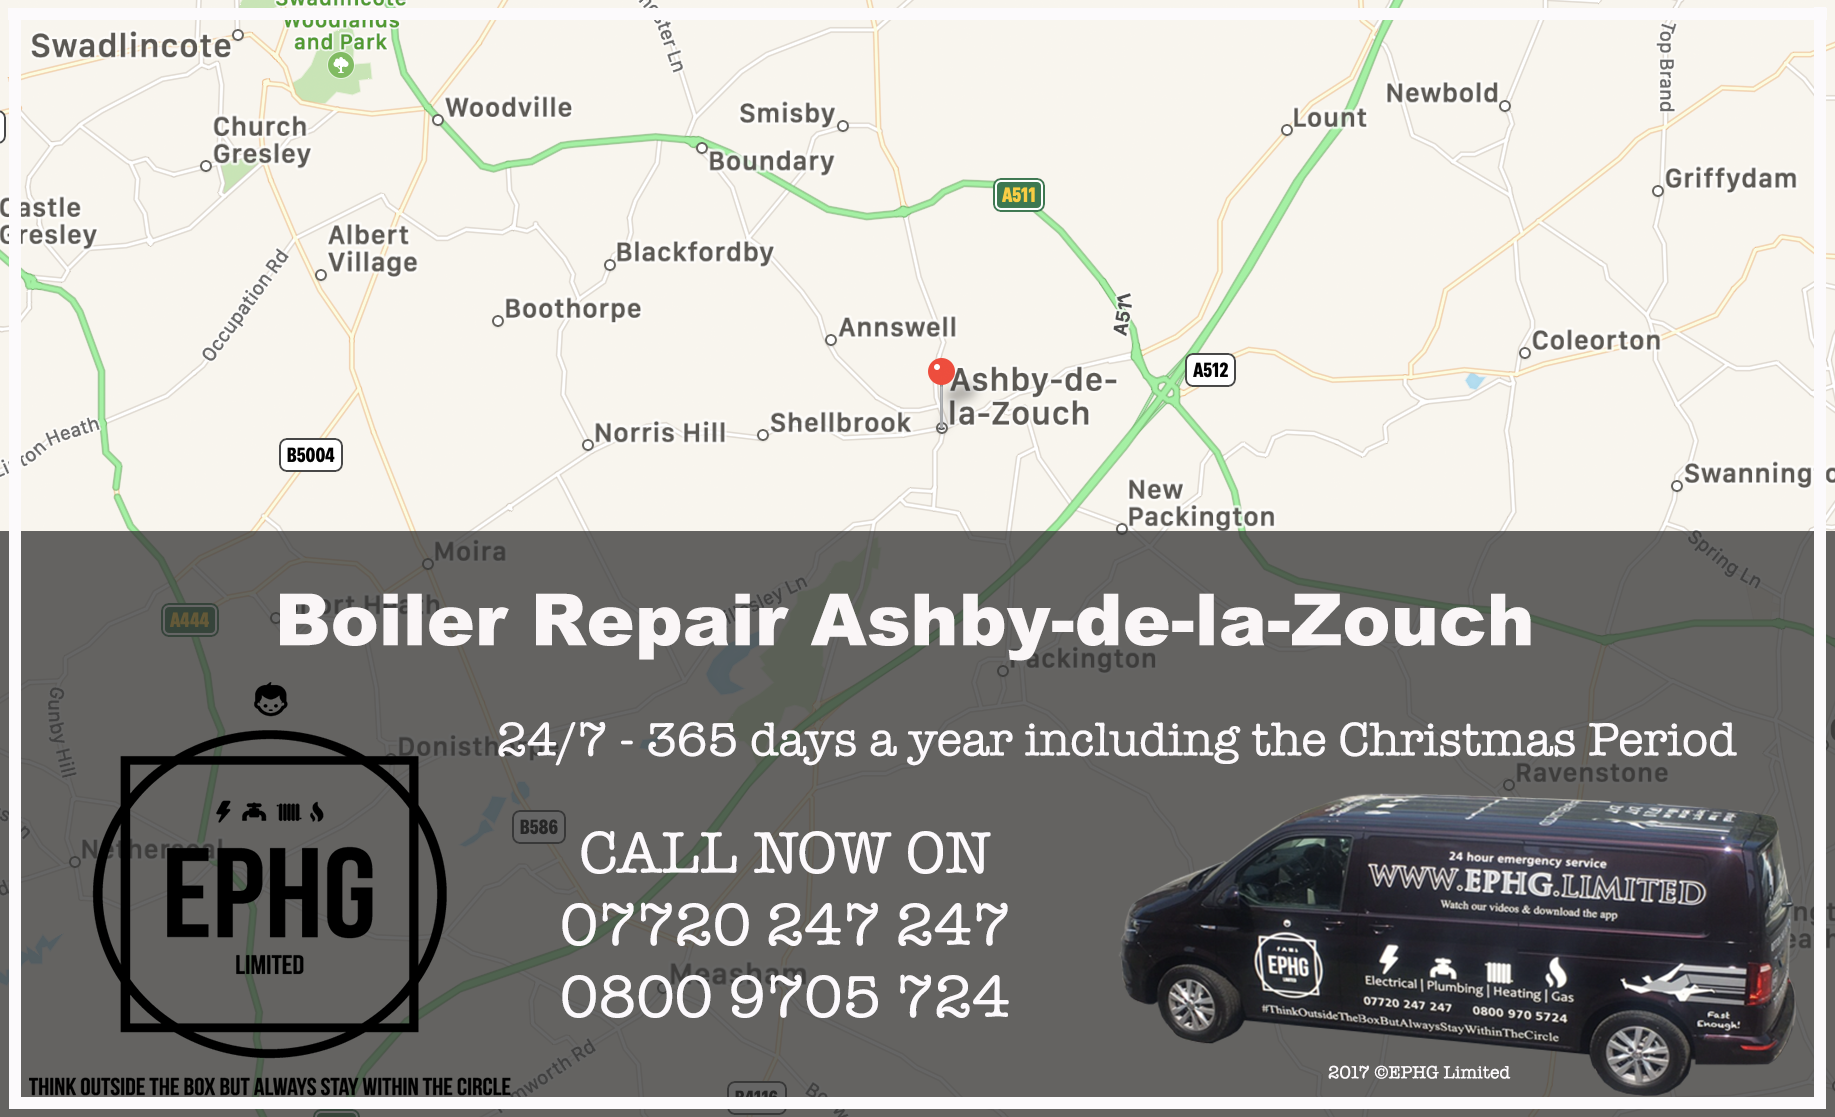 24 Hour Emergency Boiler Repair Ashby-de-la-Zouch